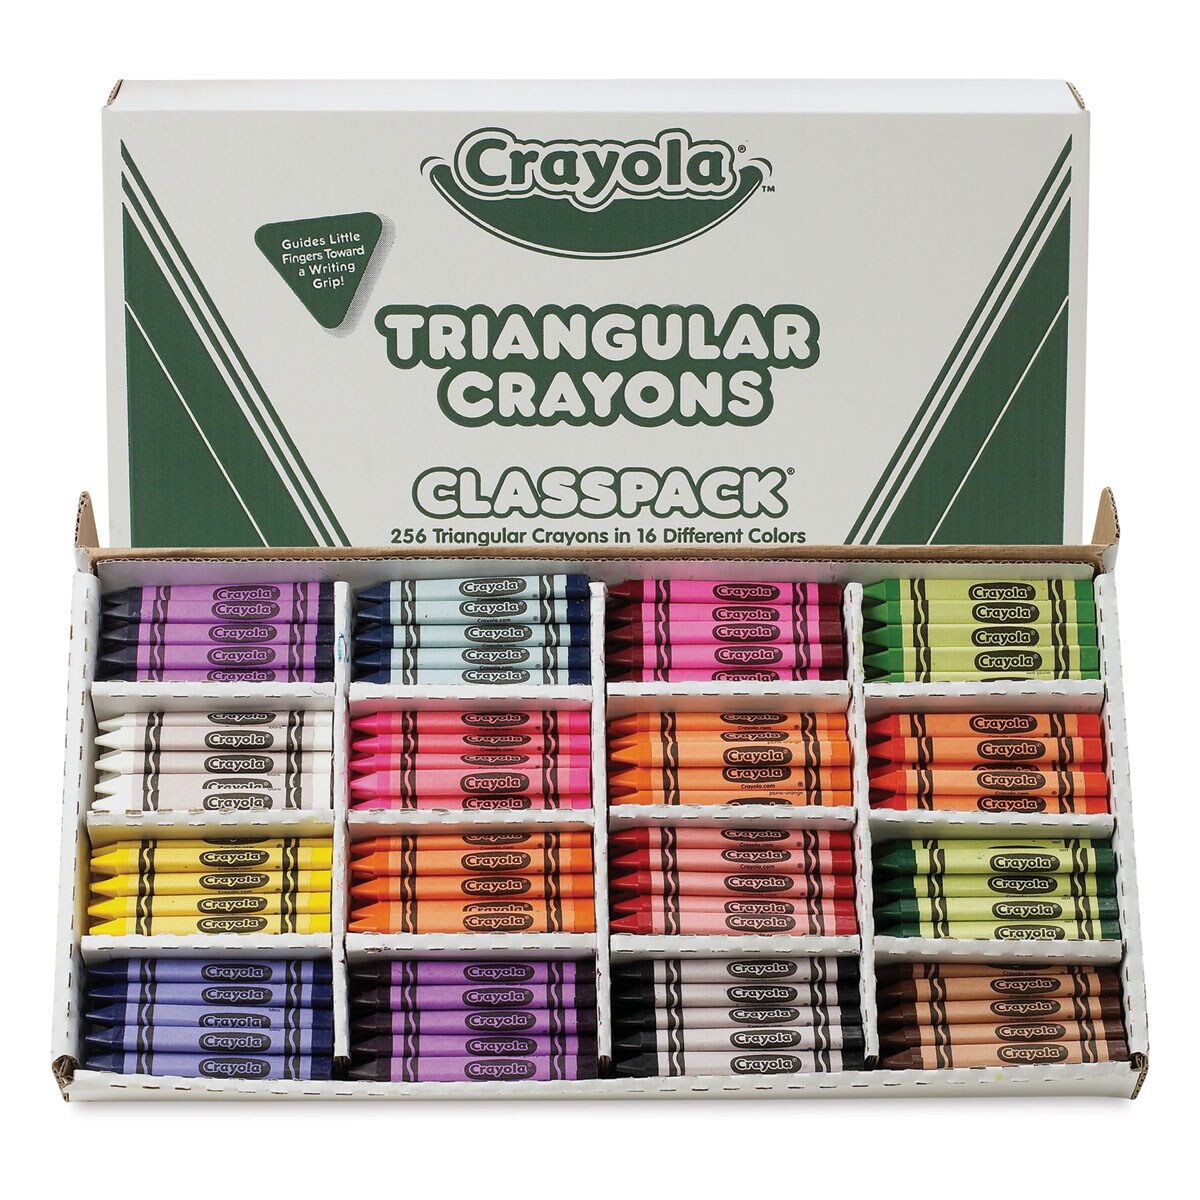 Crayola Triangular Crayons - Classpack of 256, 16 Colors